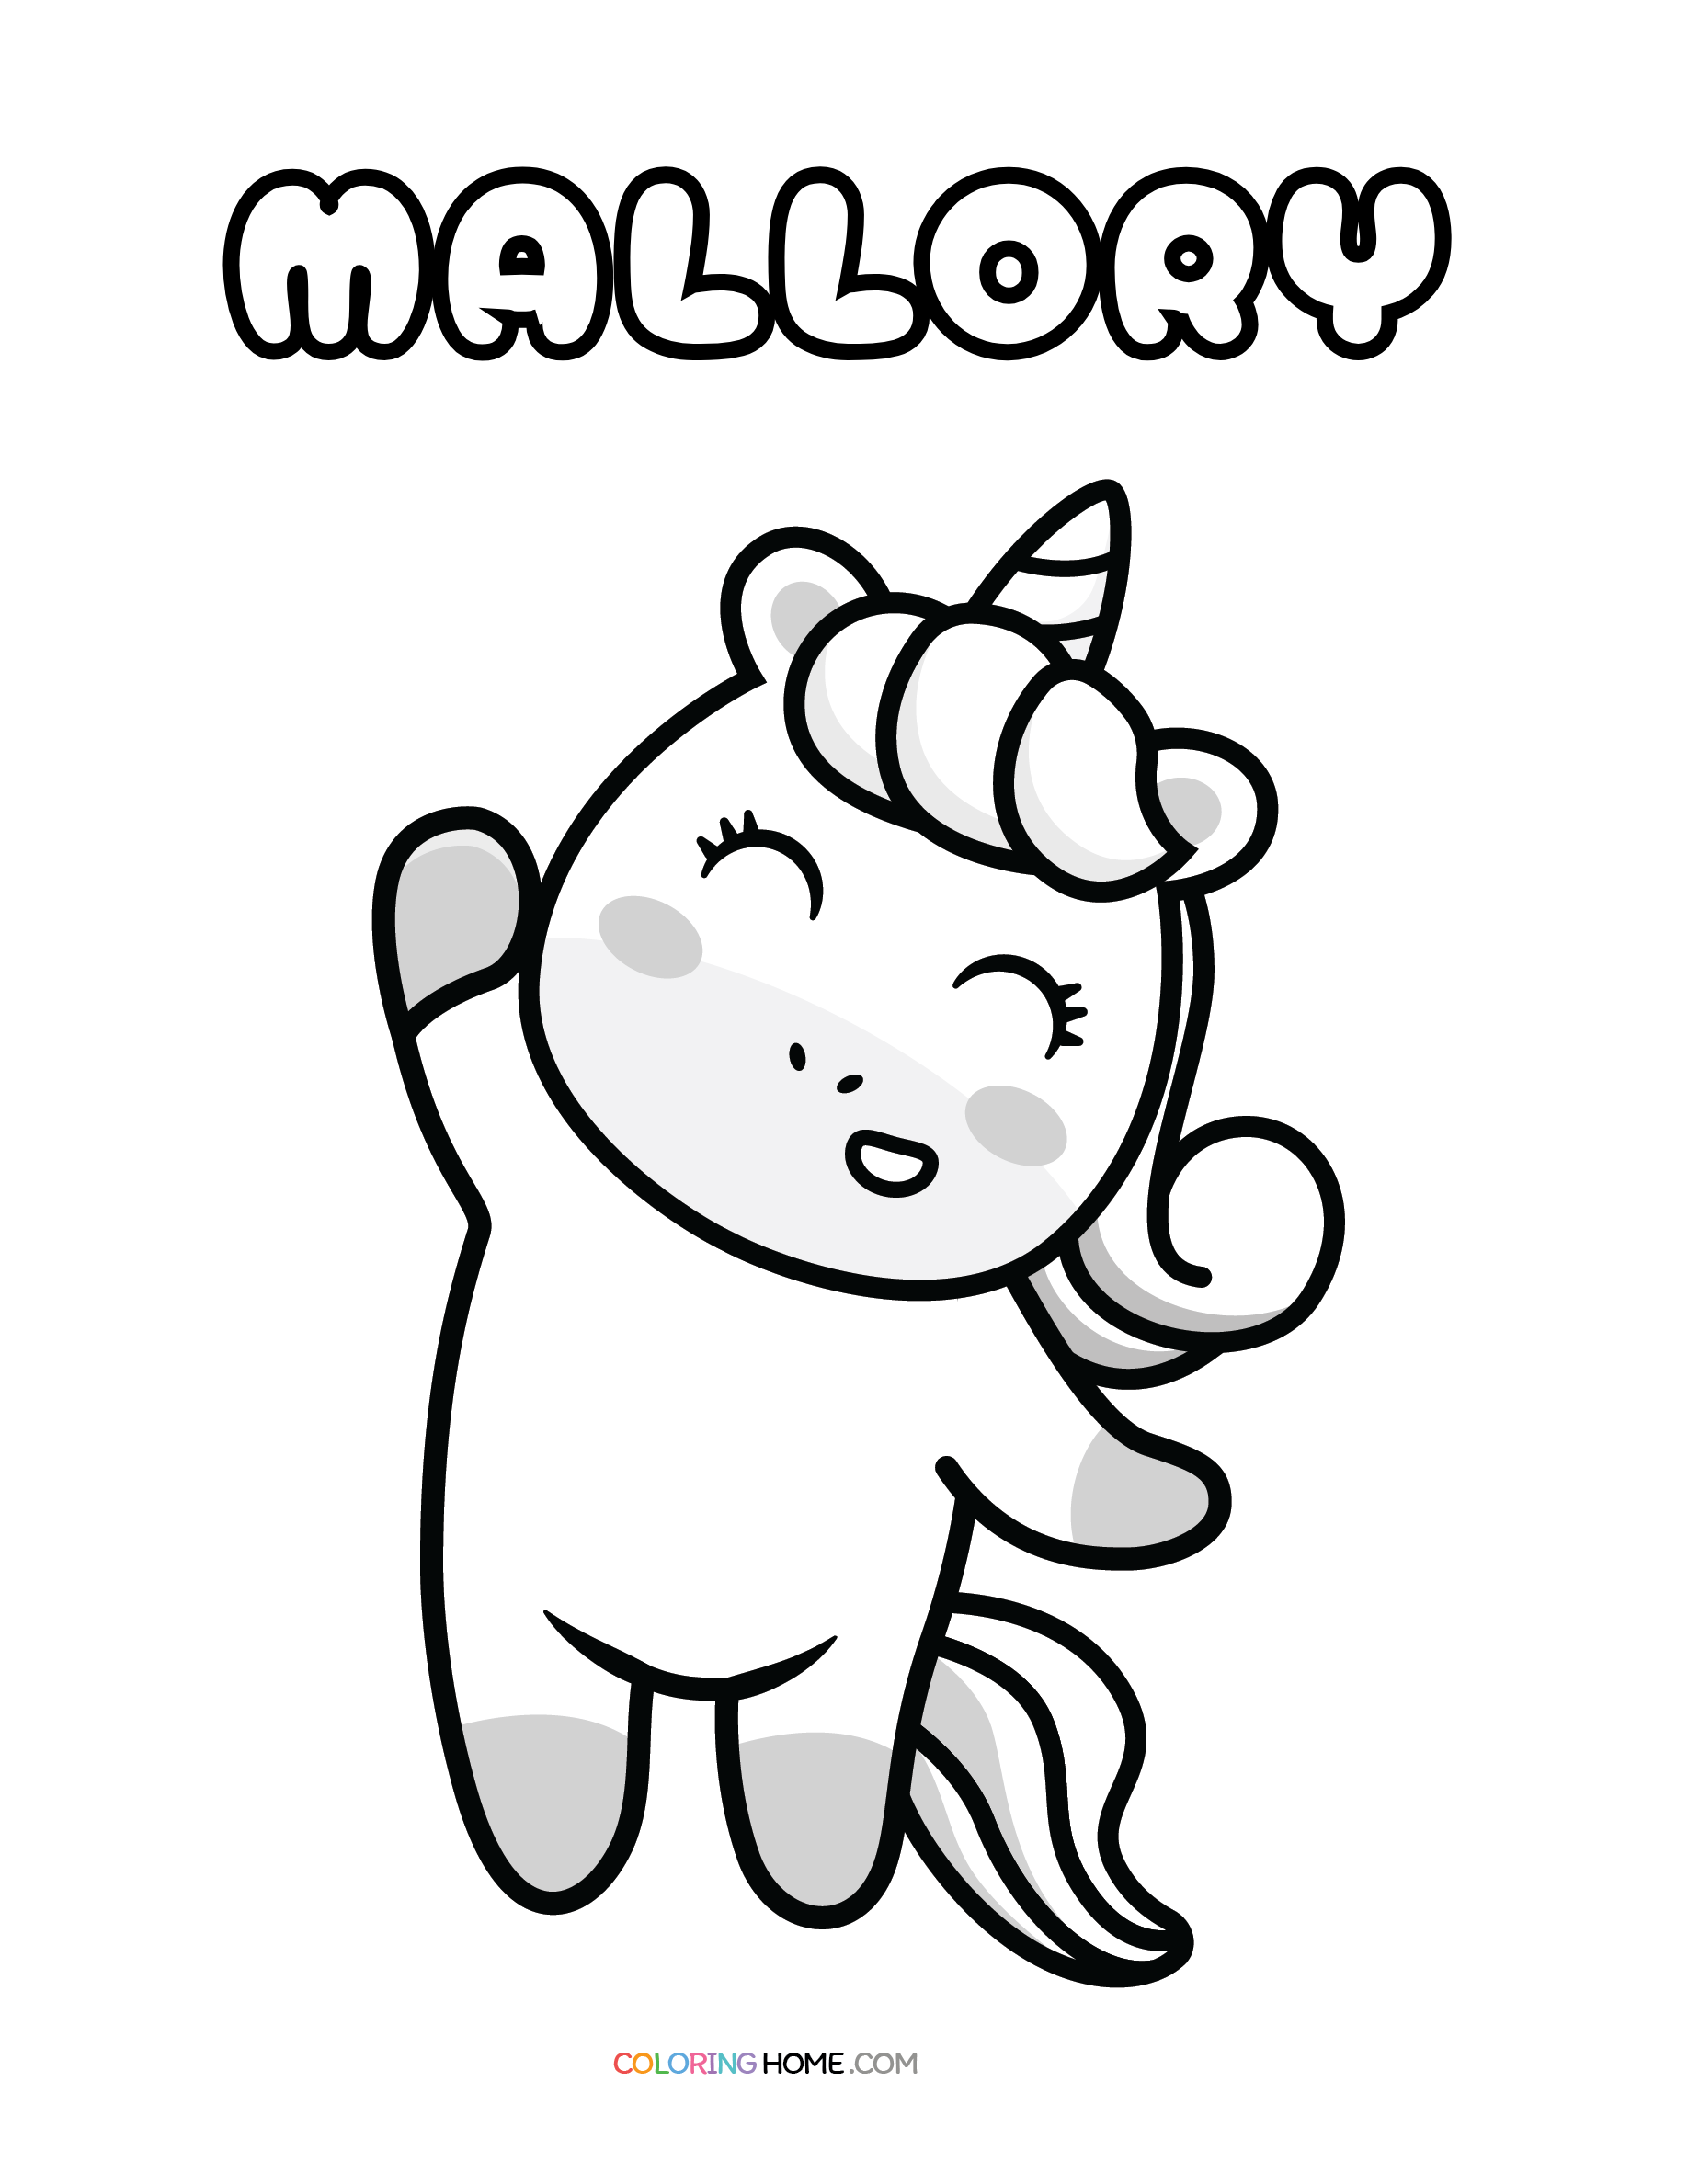 Mallory unicorn coloring page